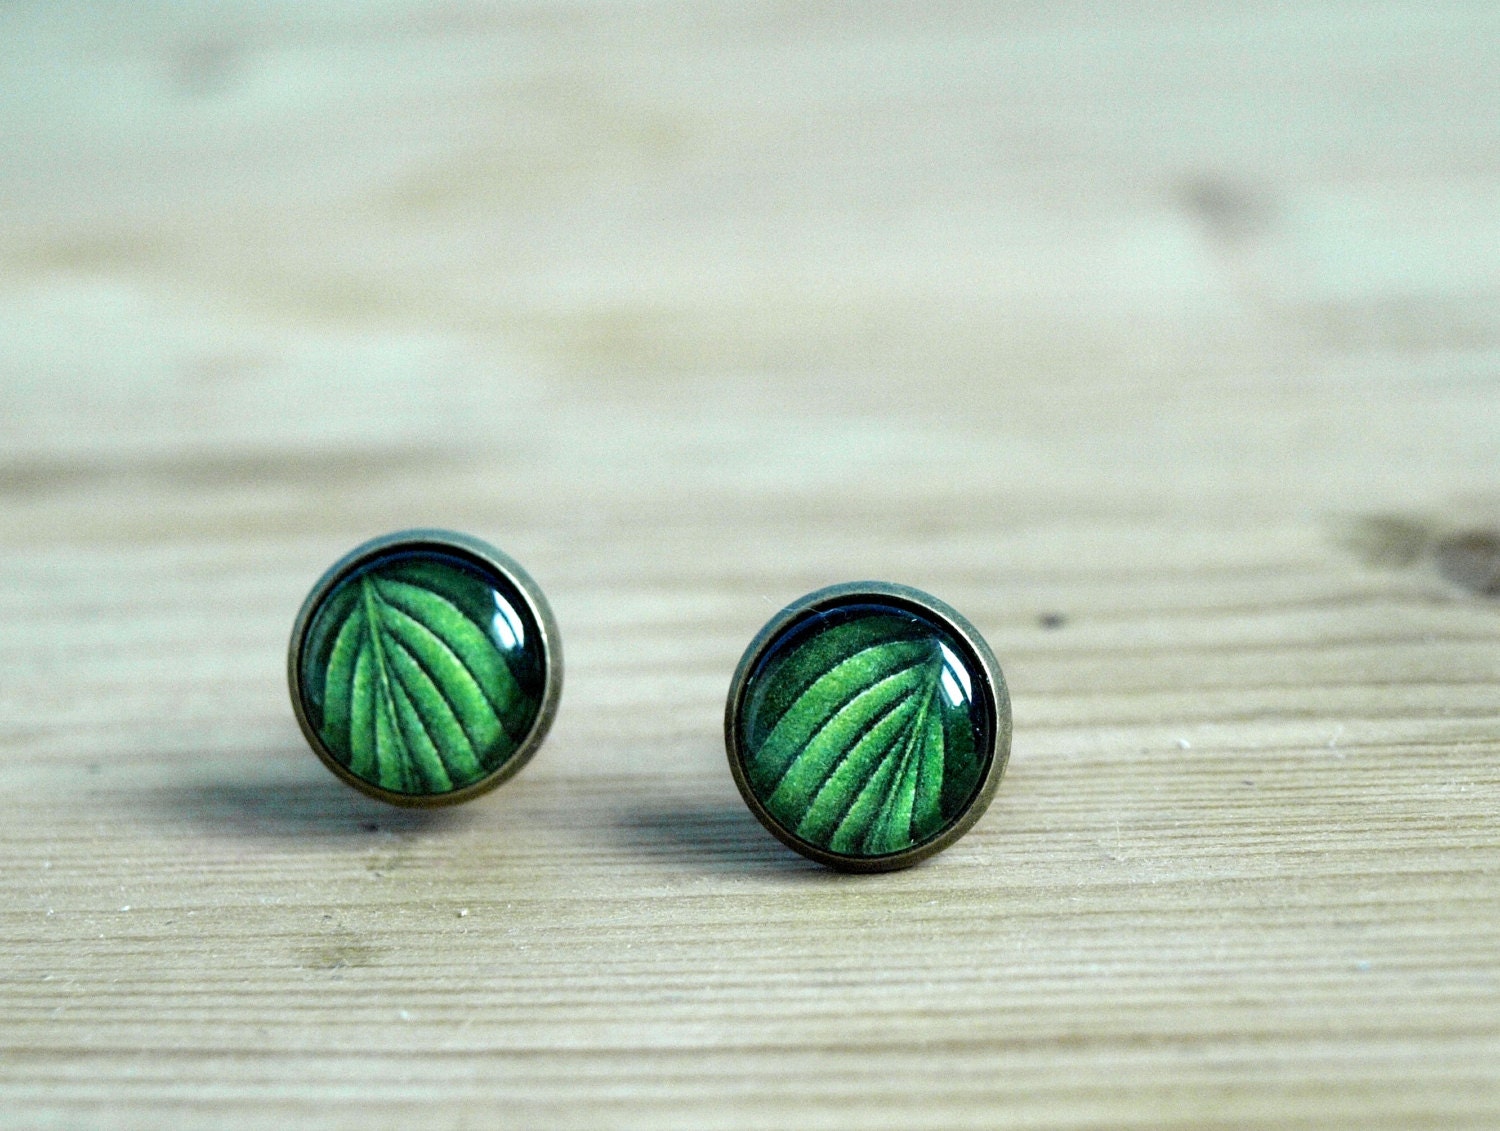 Green leaf earrings studs post -nature jewelry - cabochon earrings small ear studs- glass dome - botanical jewelry - ShoShanaArt